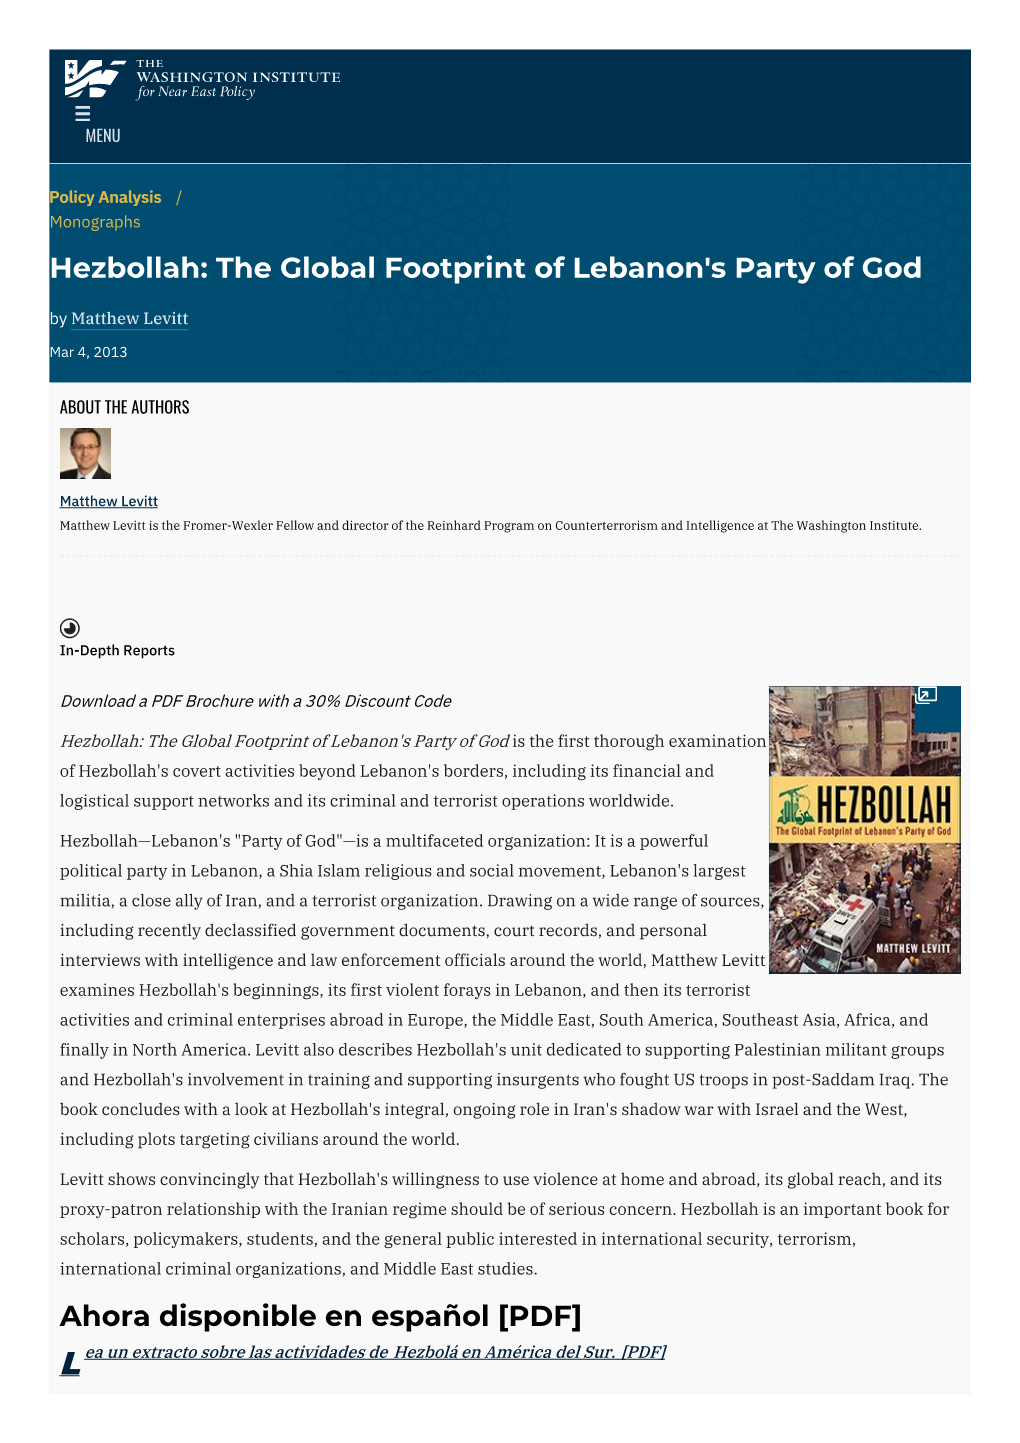 Hezbollah: the Global Footprint of Lebanon's Party of God by Matthew Levitt